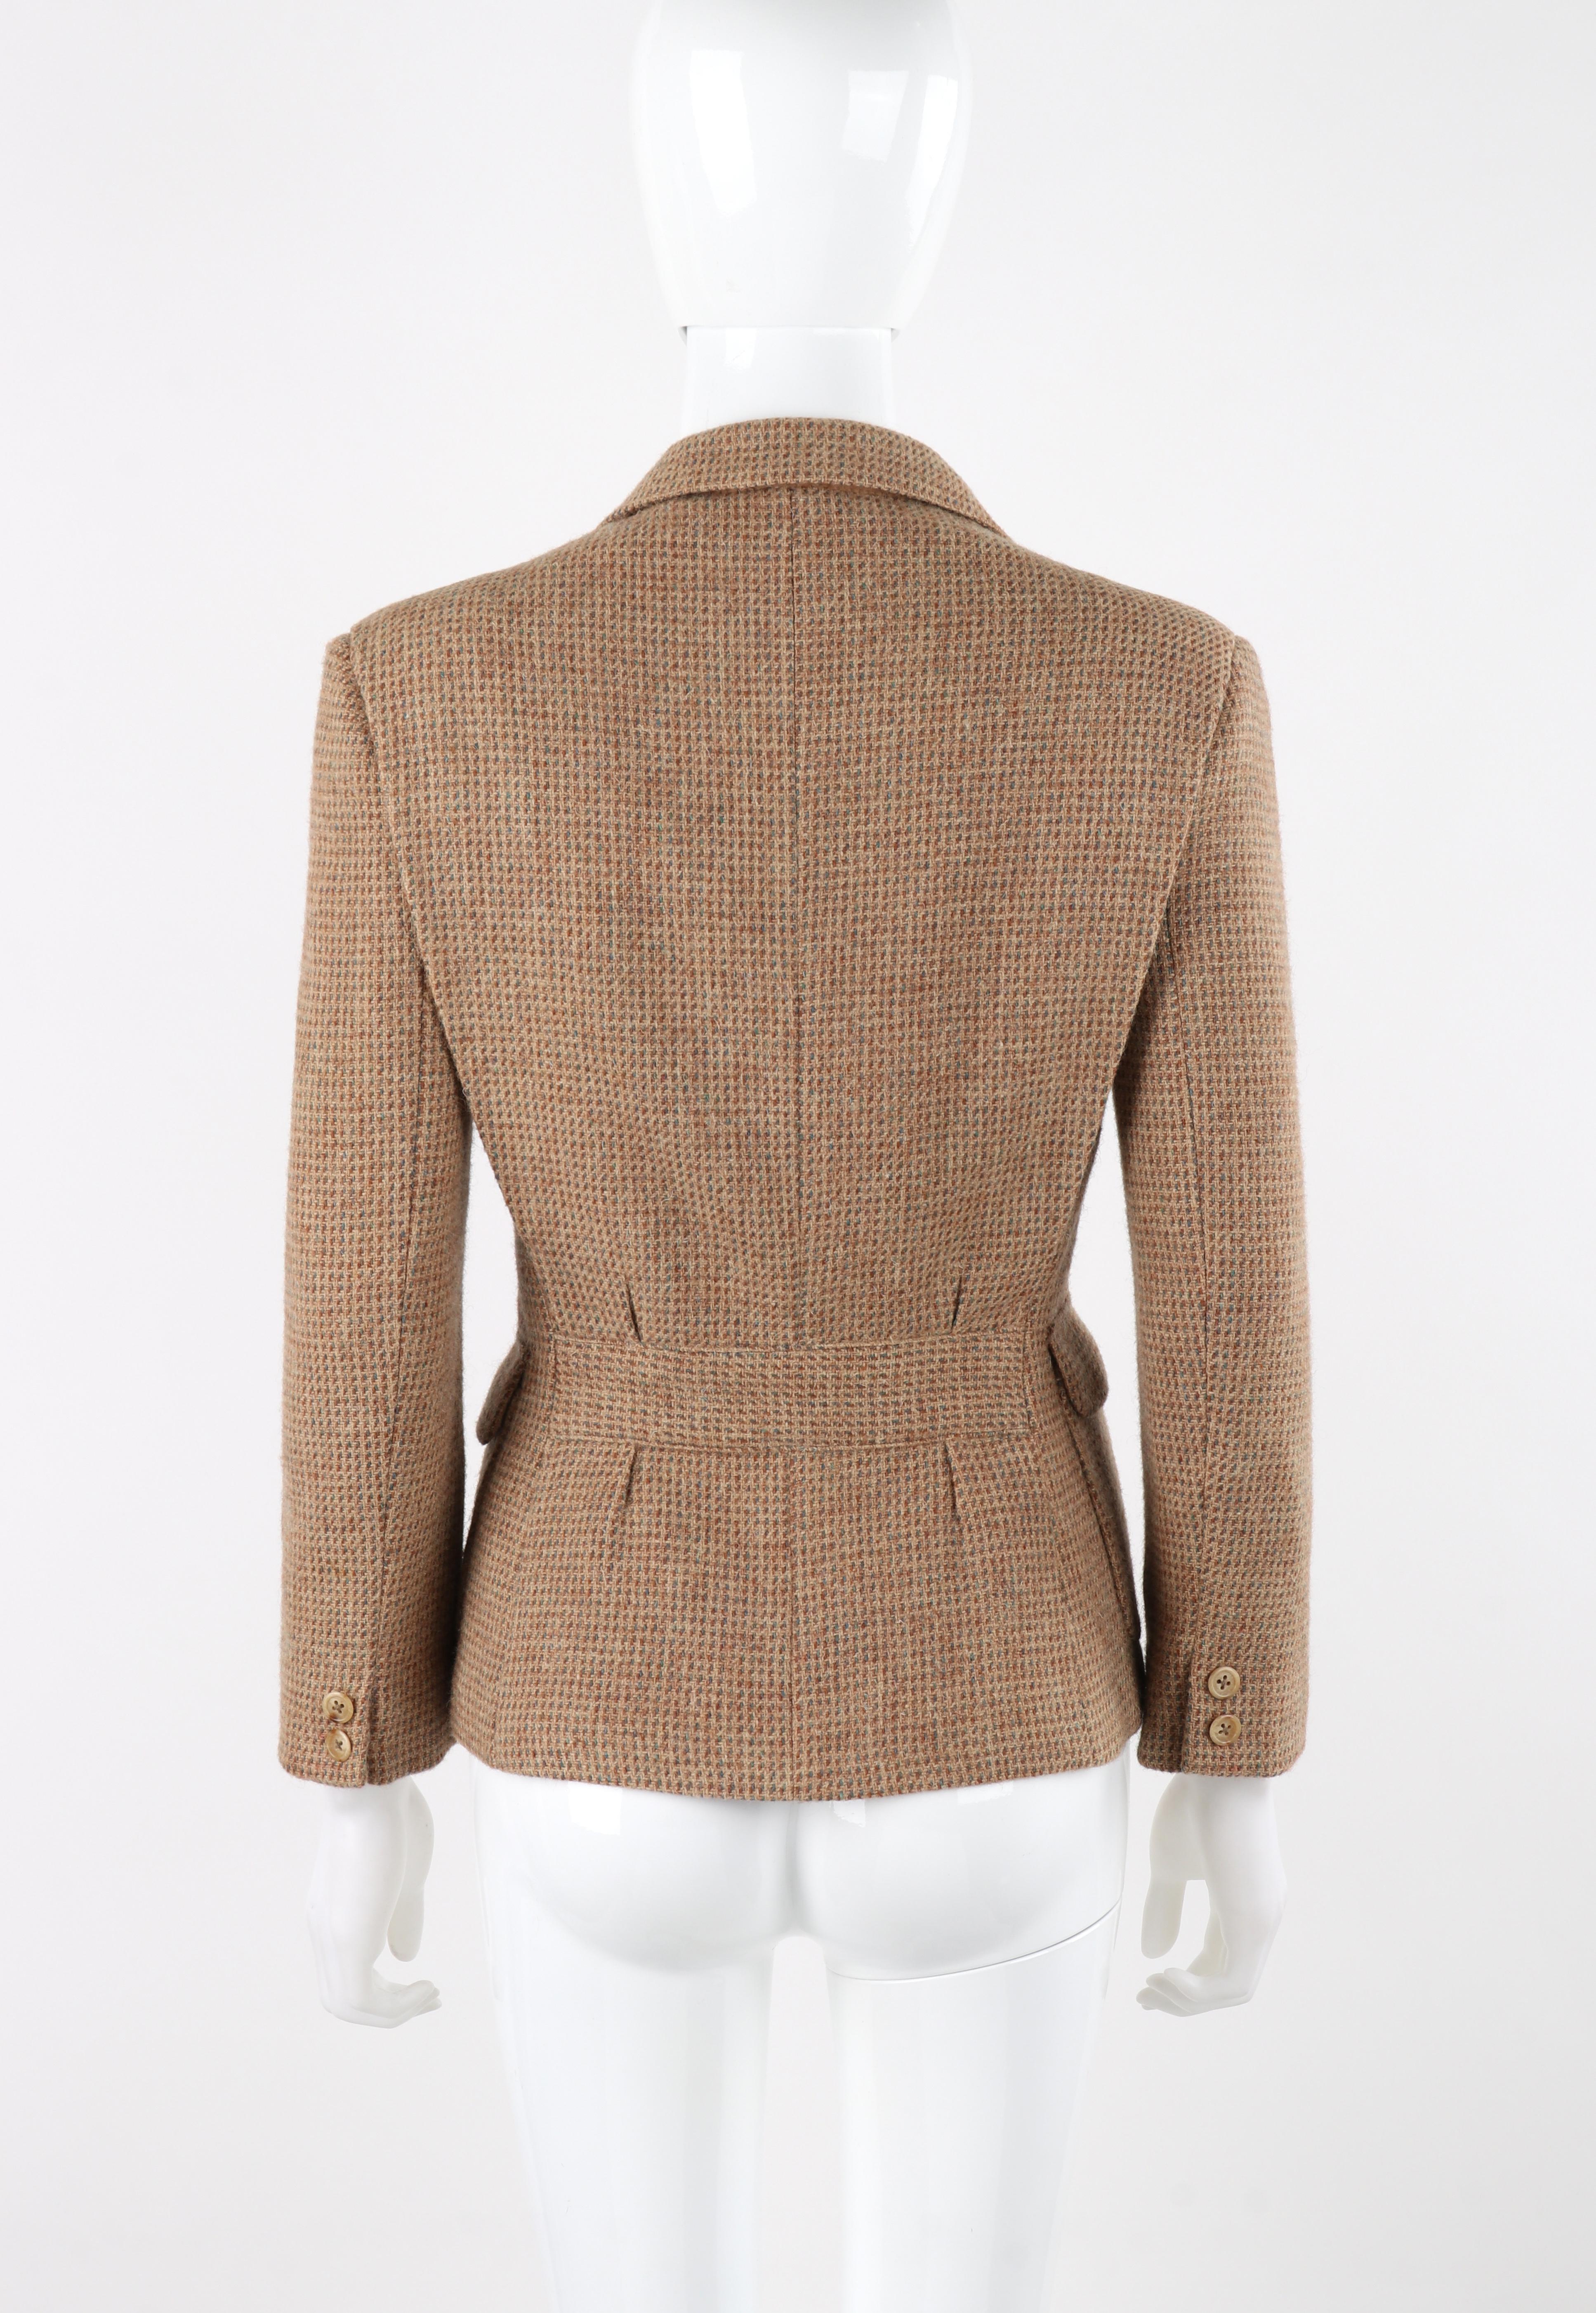 RALPH LAUREN c.1970's Brown Tan Tweed Wool Fitted Button Up Blazer Coat Jacket  For Sale 1